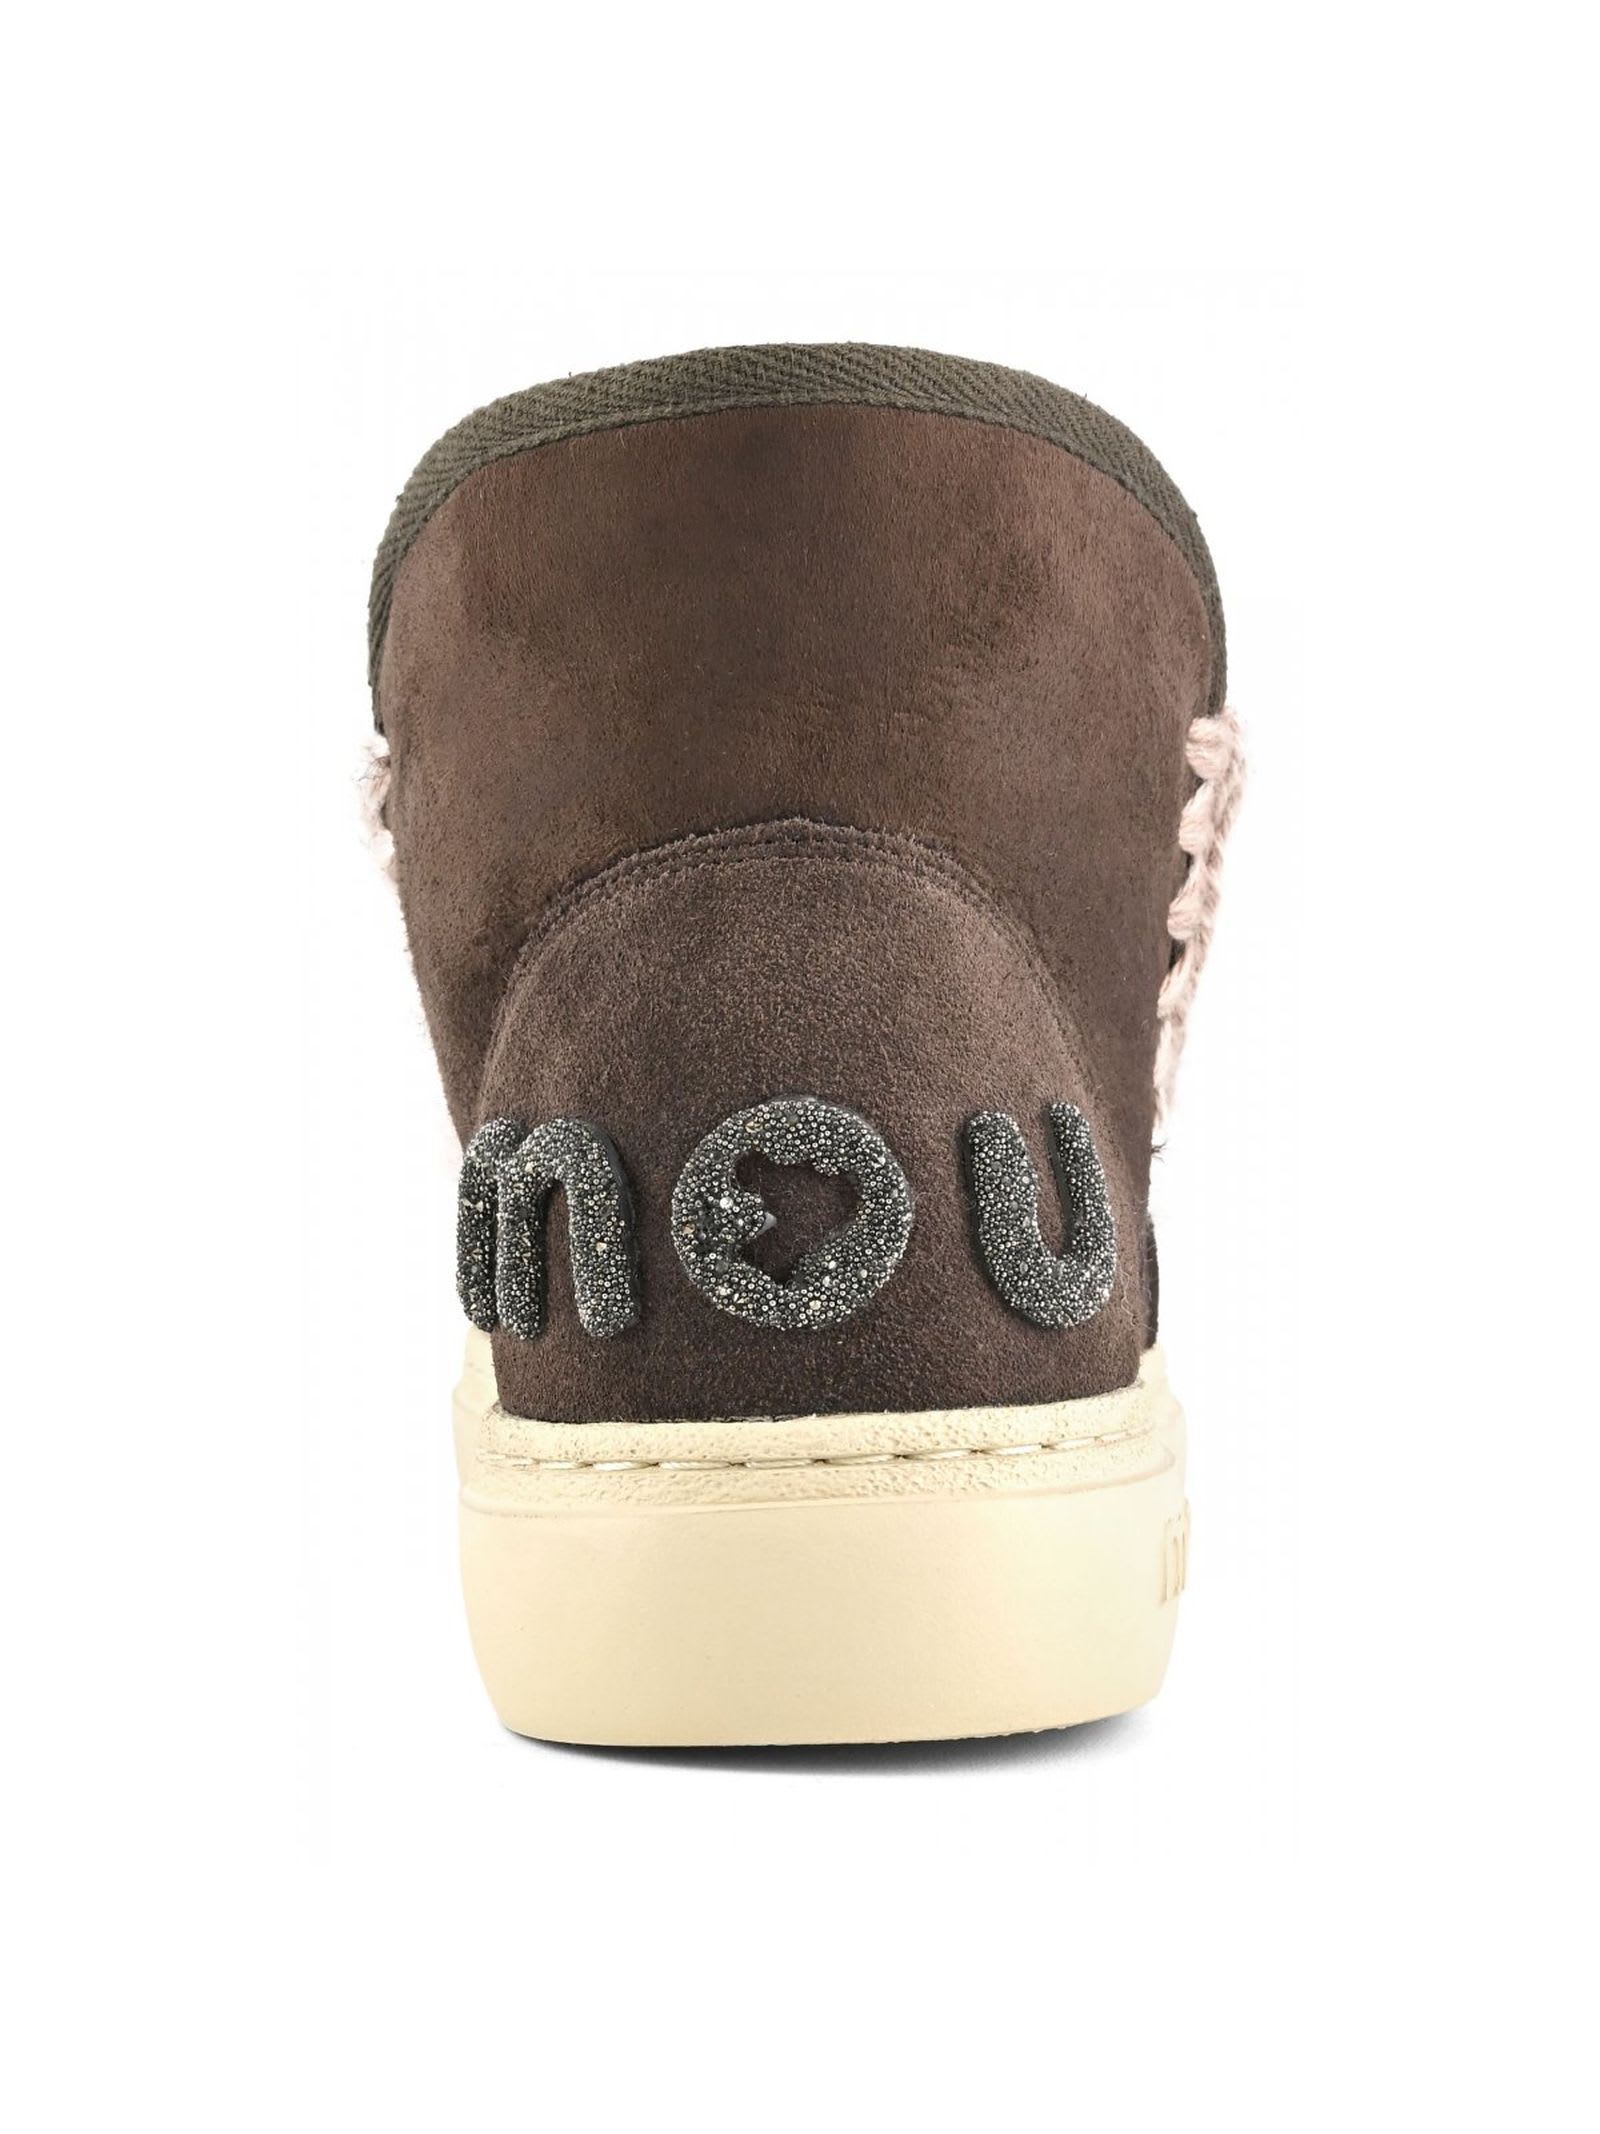 Shop Mou Eskimo Sneaker Bold In Brown Leather